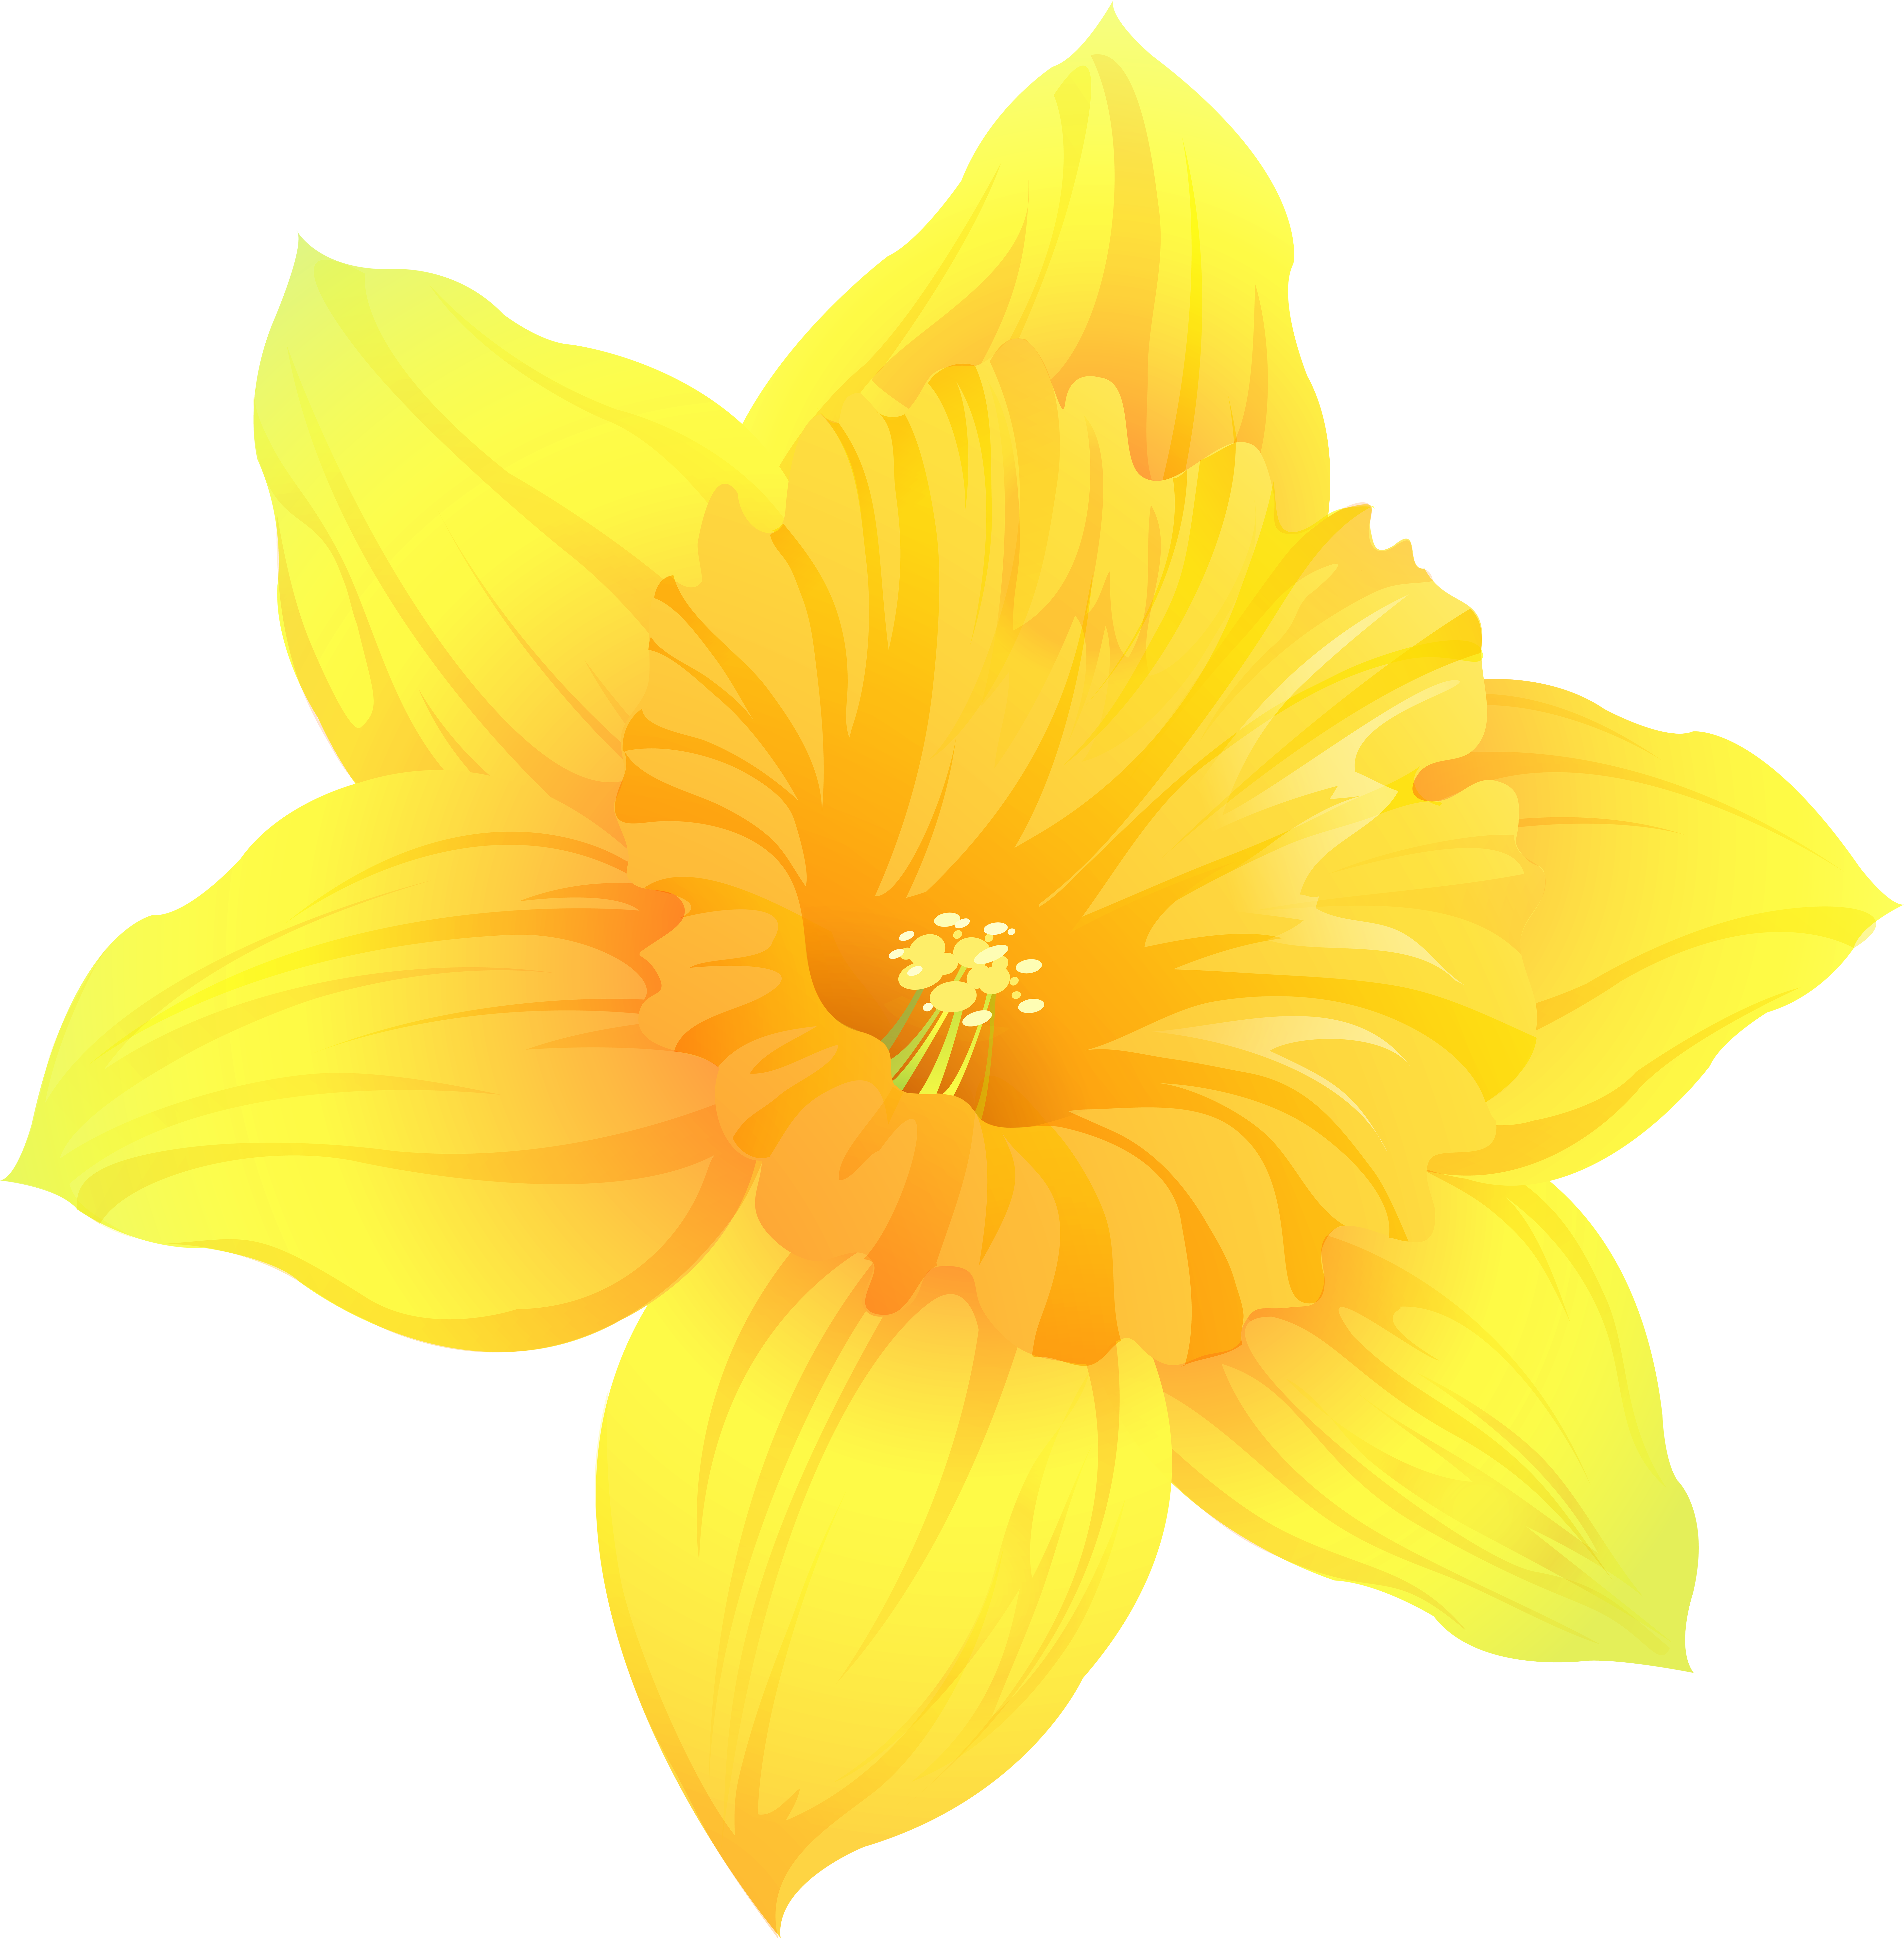 Vibrant Yellow Daffodil Illustration PNG image